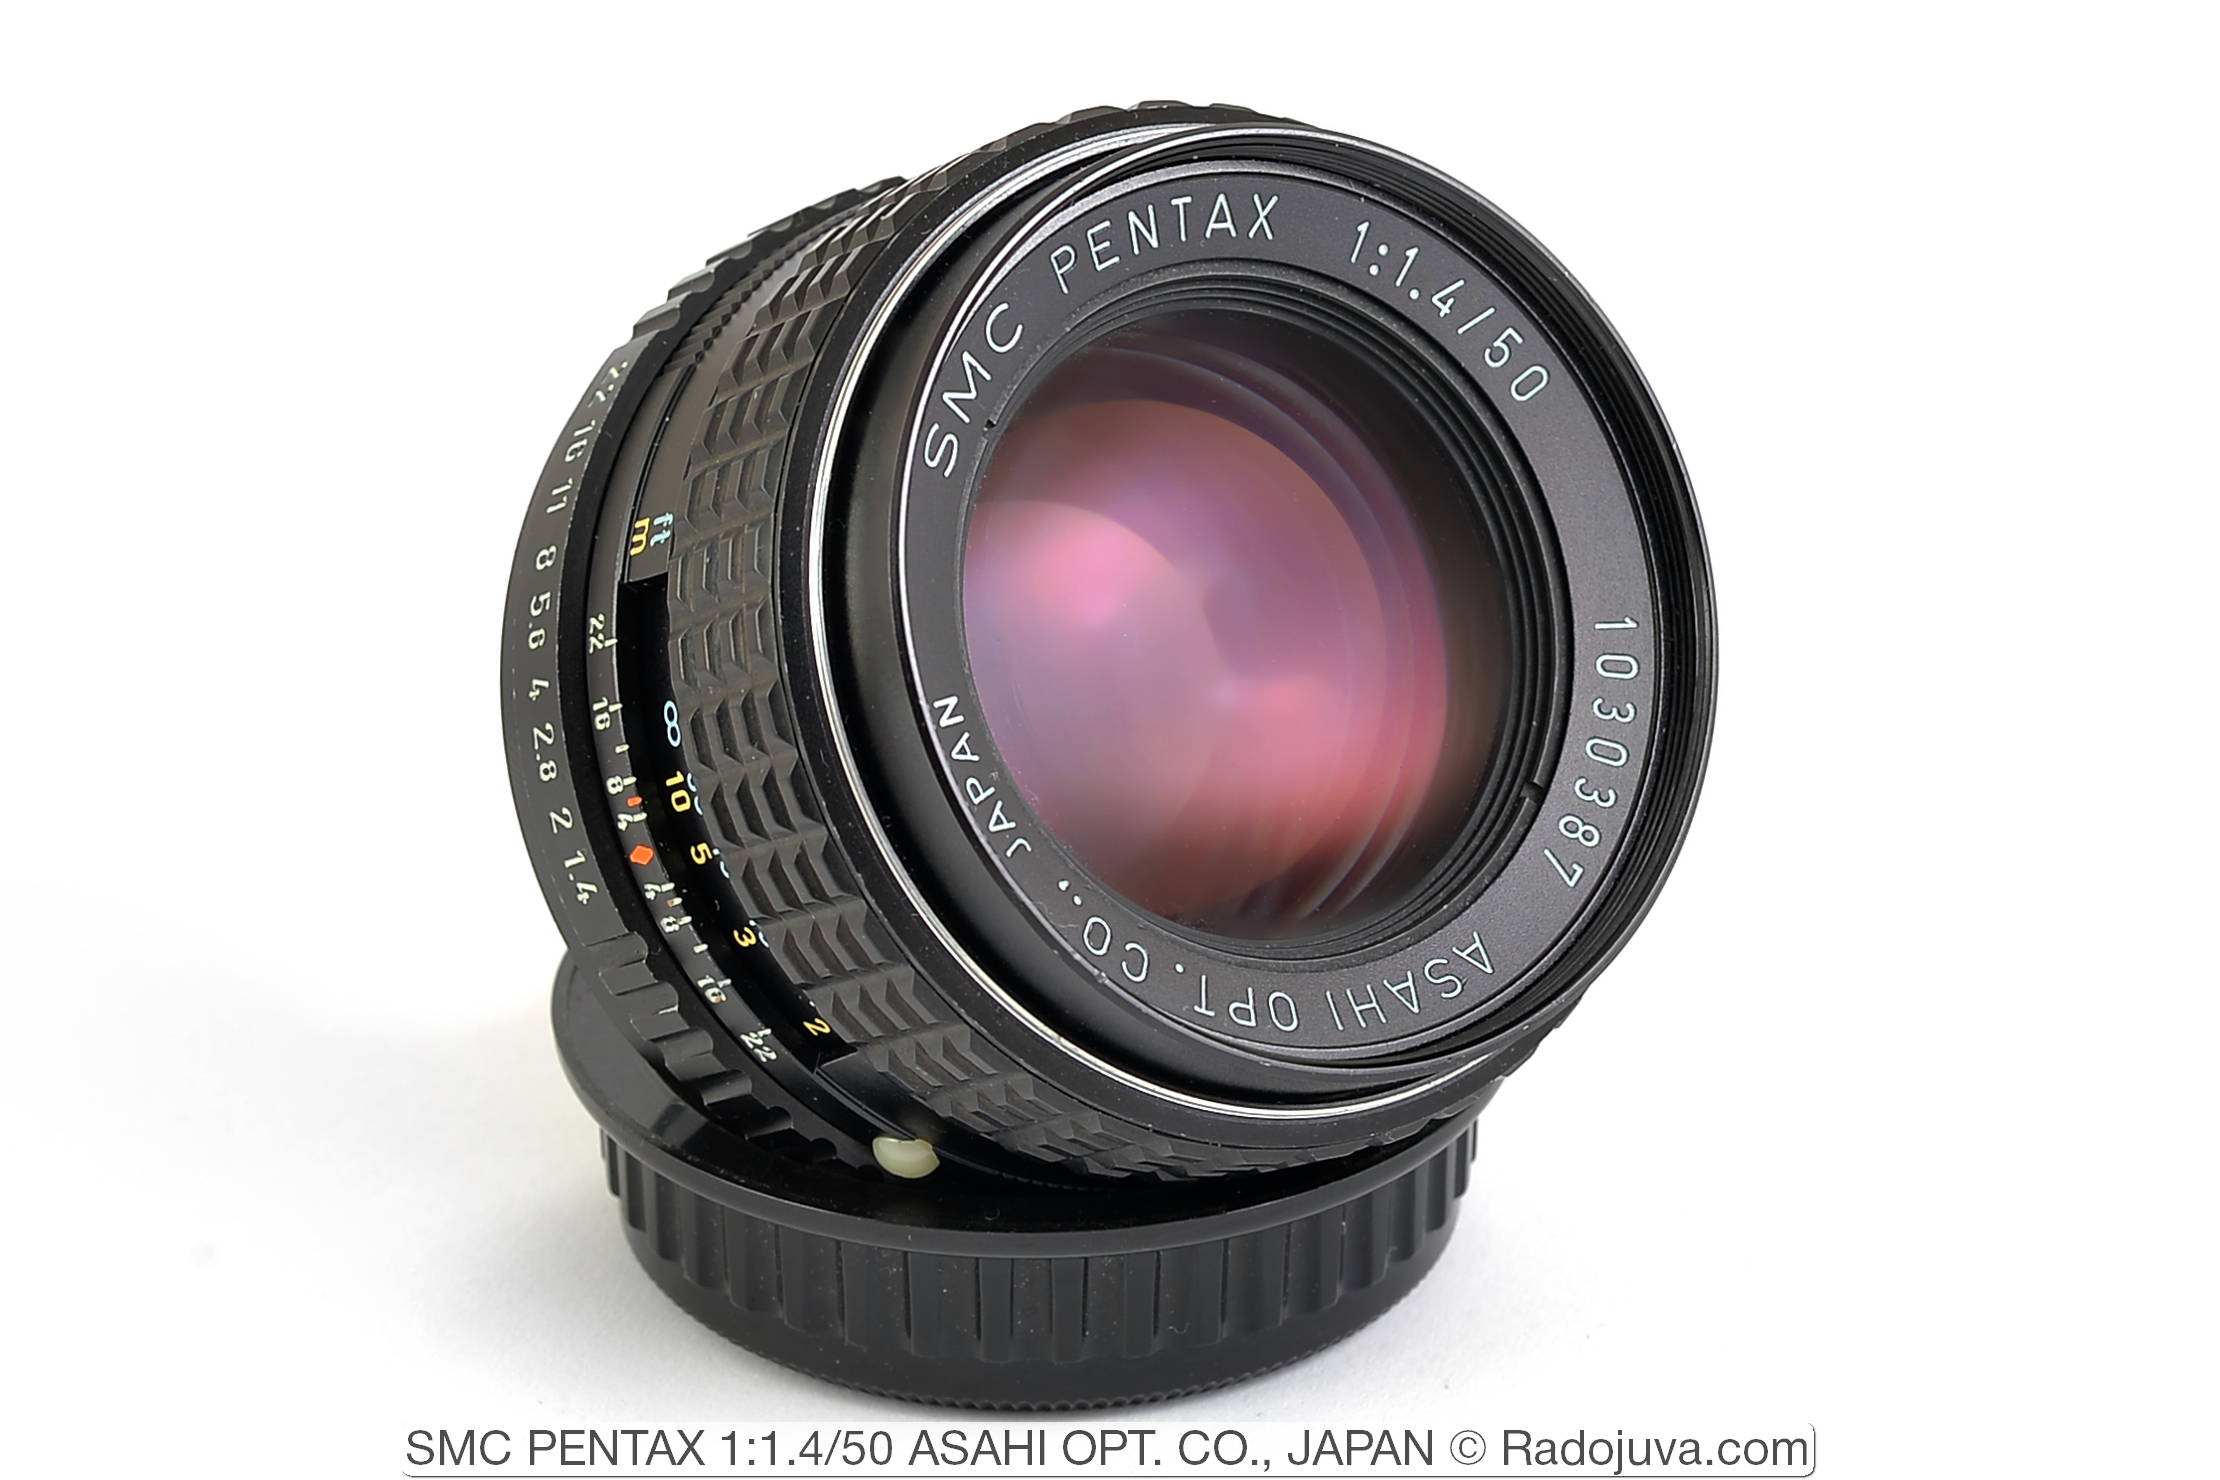 SMC PENTAX 1: 1.4 / 50 ASAHI OPT Short Review. CO., JAPAN | Radozhiva